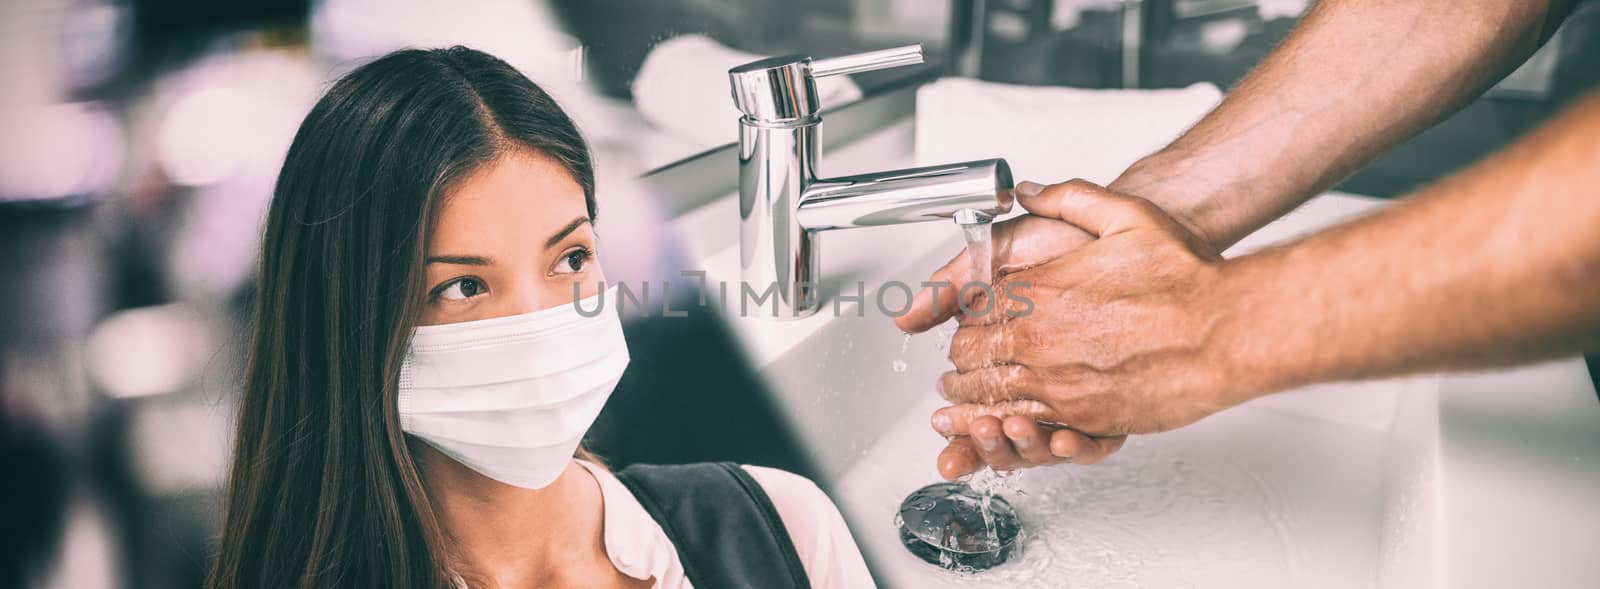 Coronavirus Wuhan China outbreak Asian chinese woman wearing face mask versus man washing hands in hot water rubbing in soap panoramic banner by Maridav